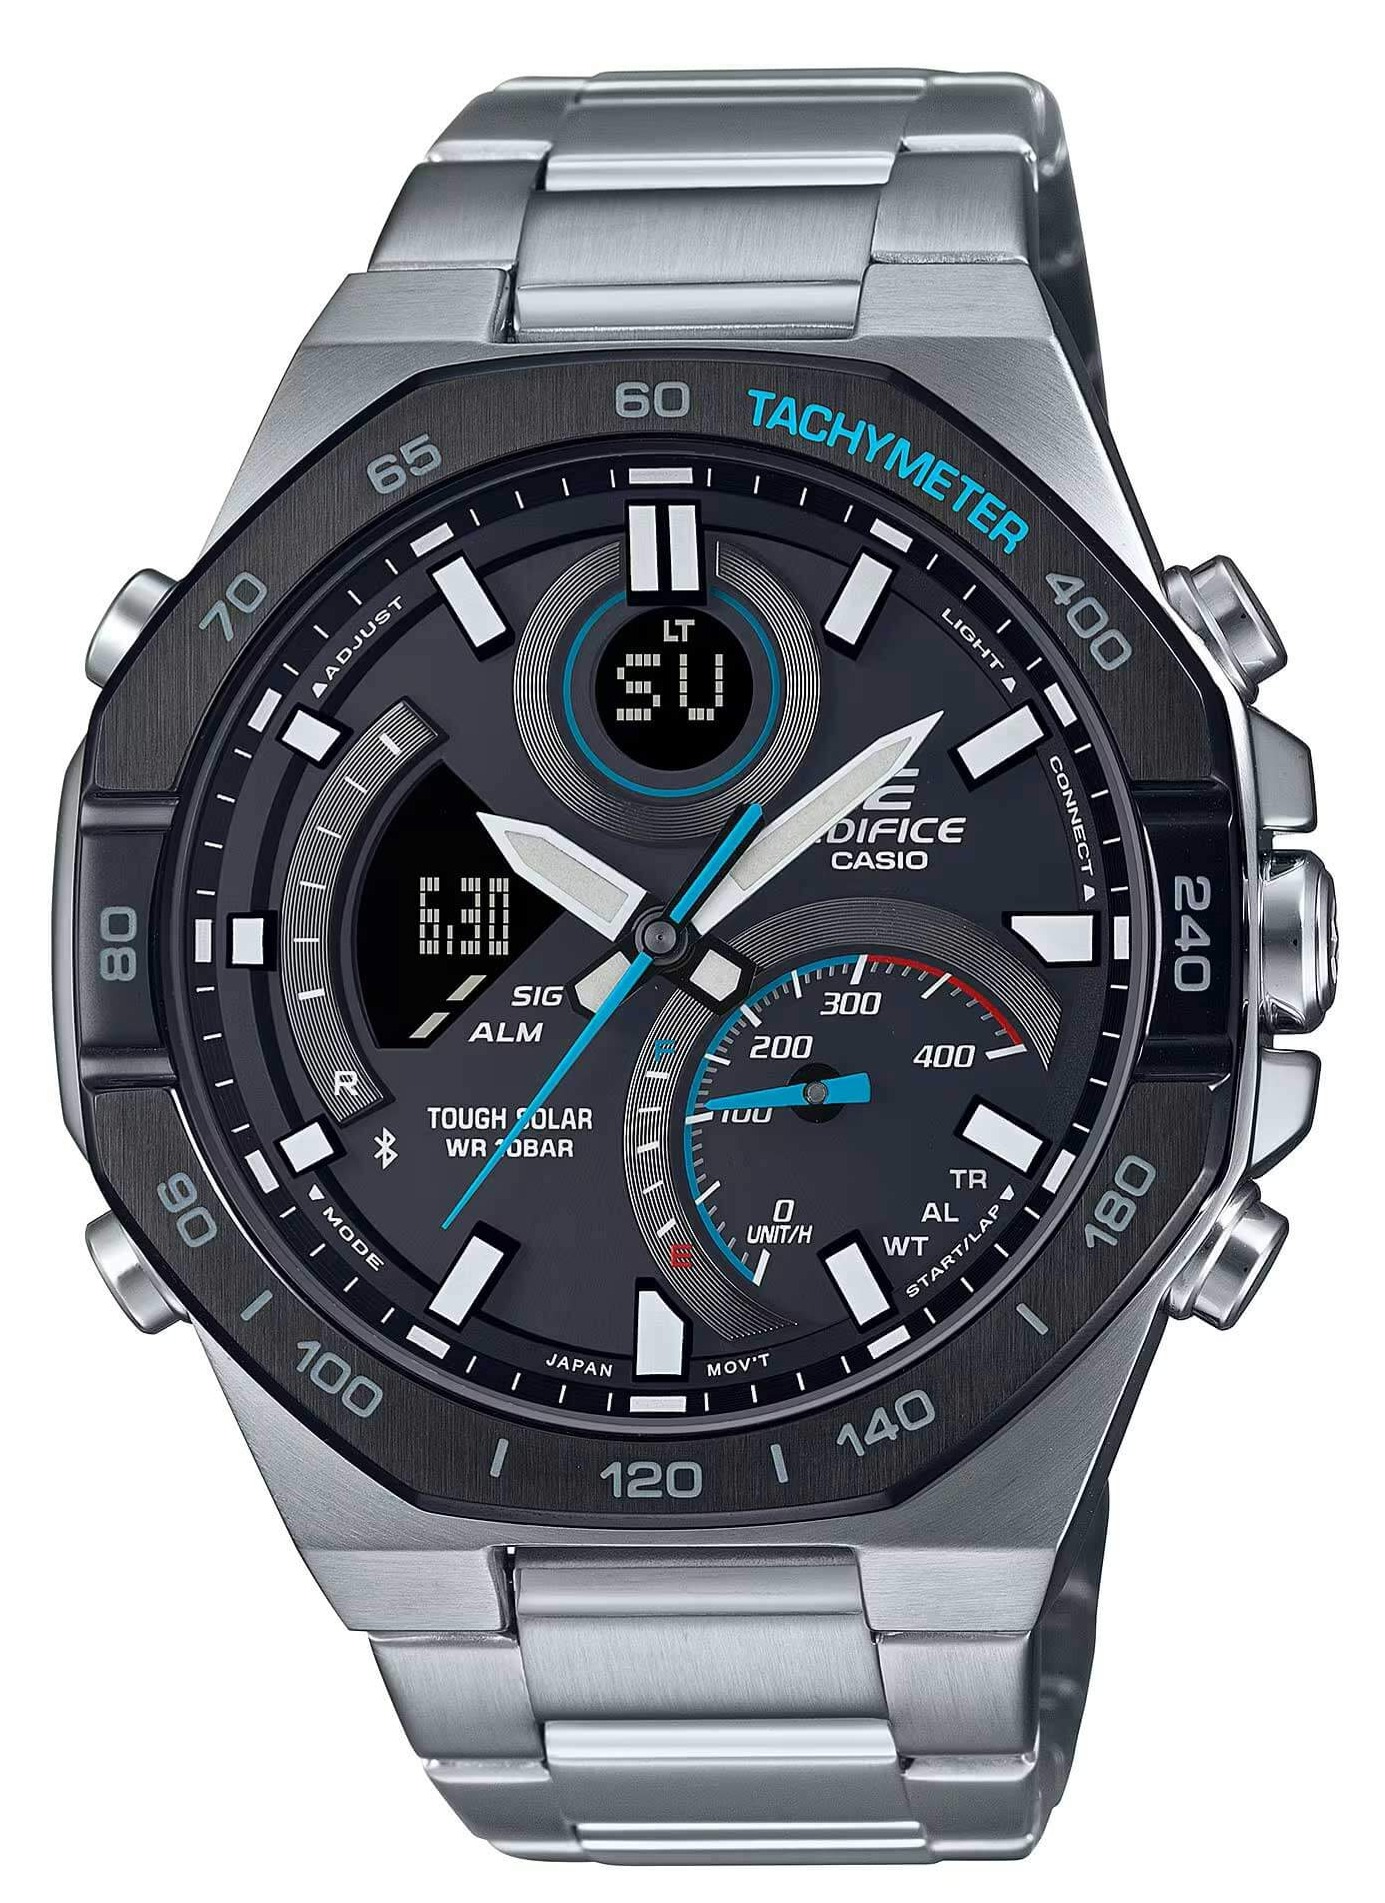 Casio Men's Watch - Edifice Black Ana-Digi Dial Steel Bracelet Bluetooth $156.99